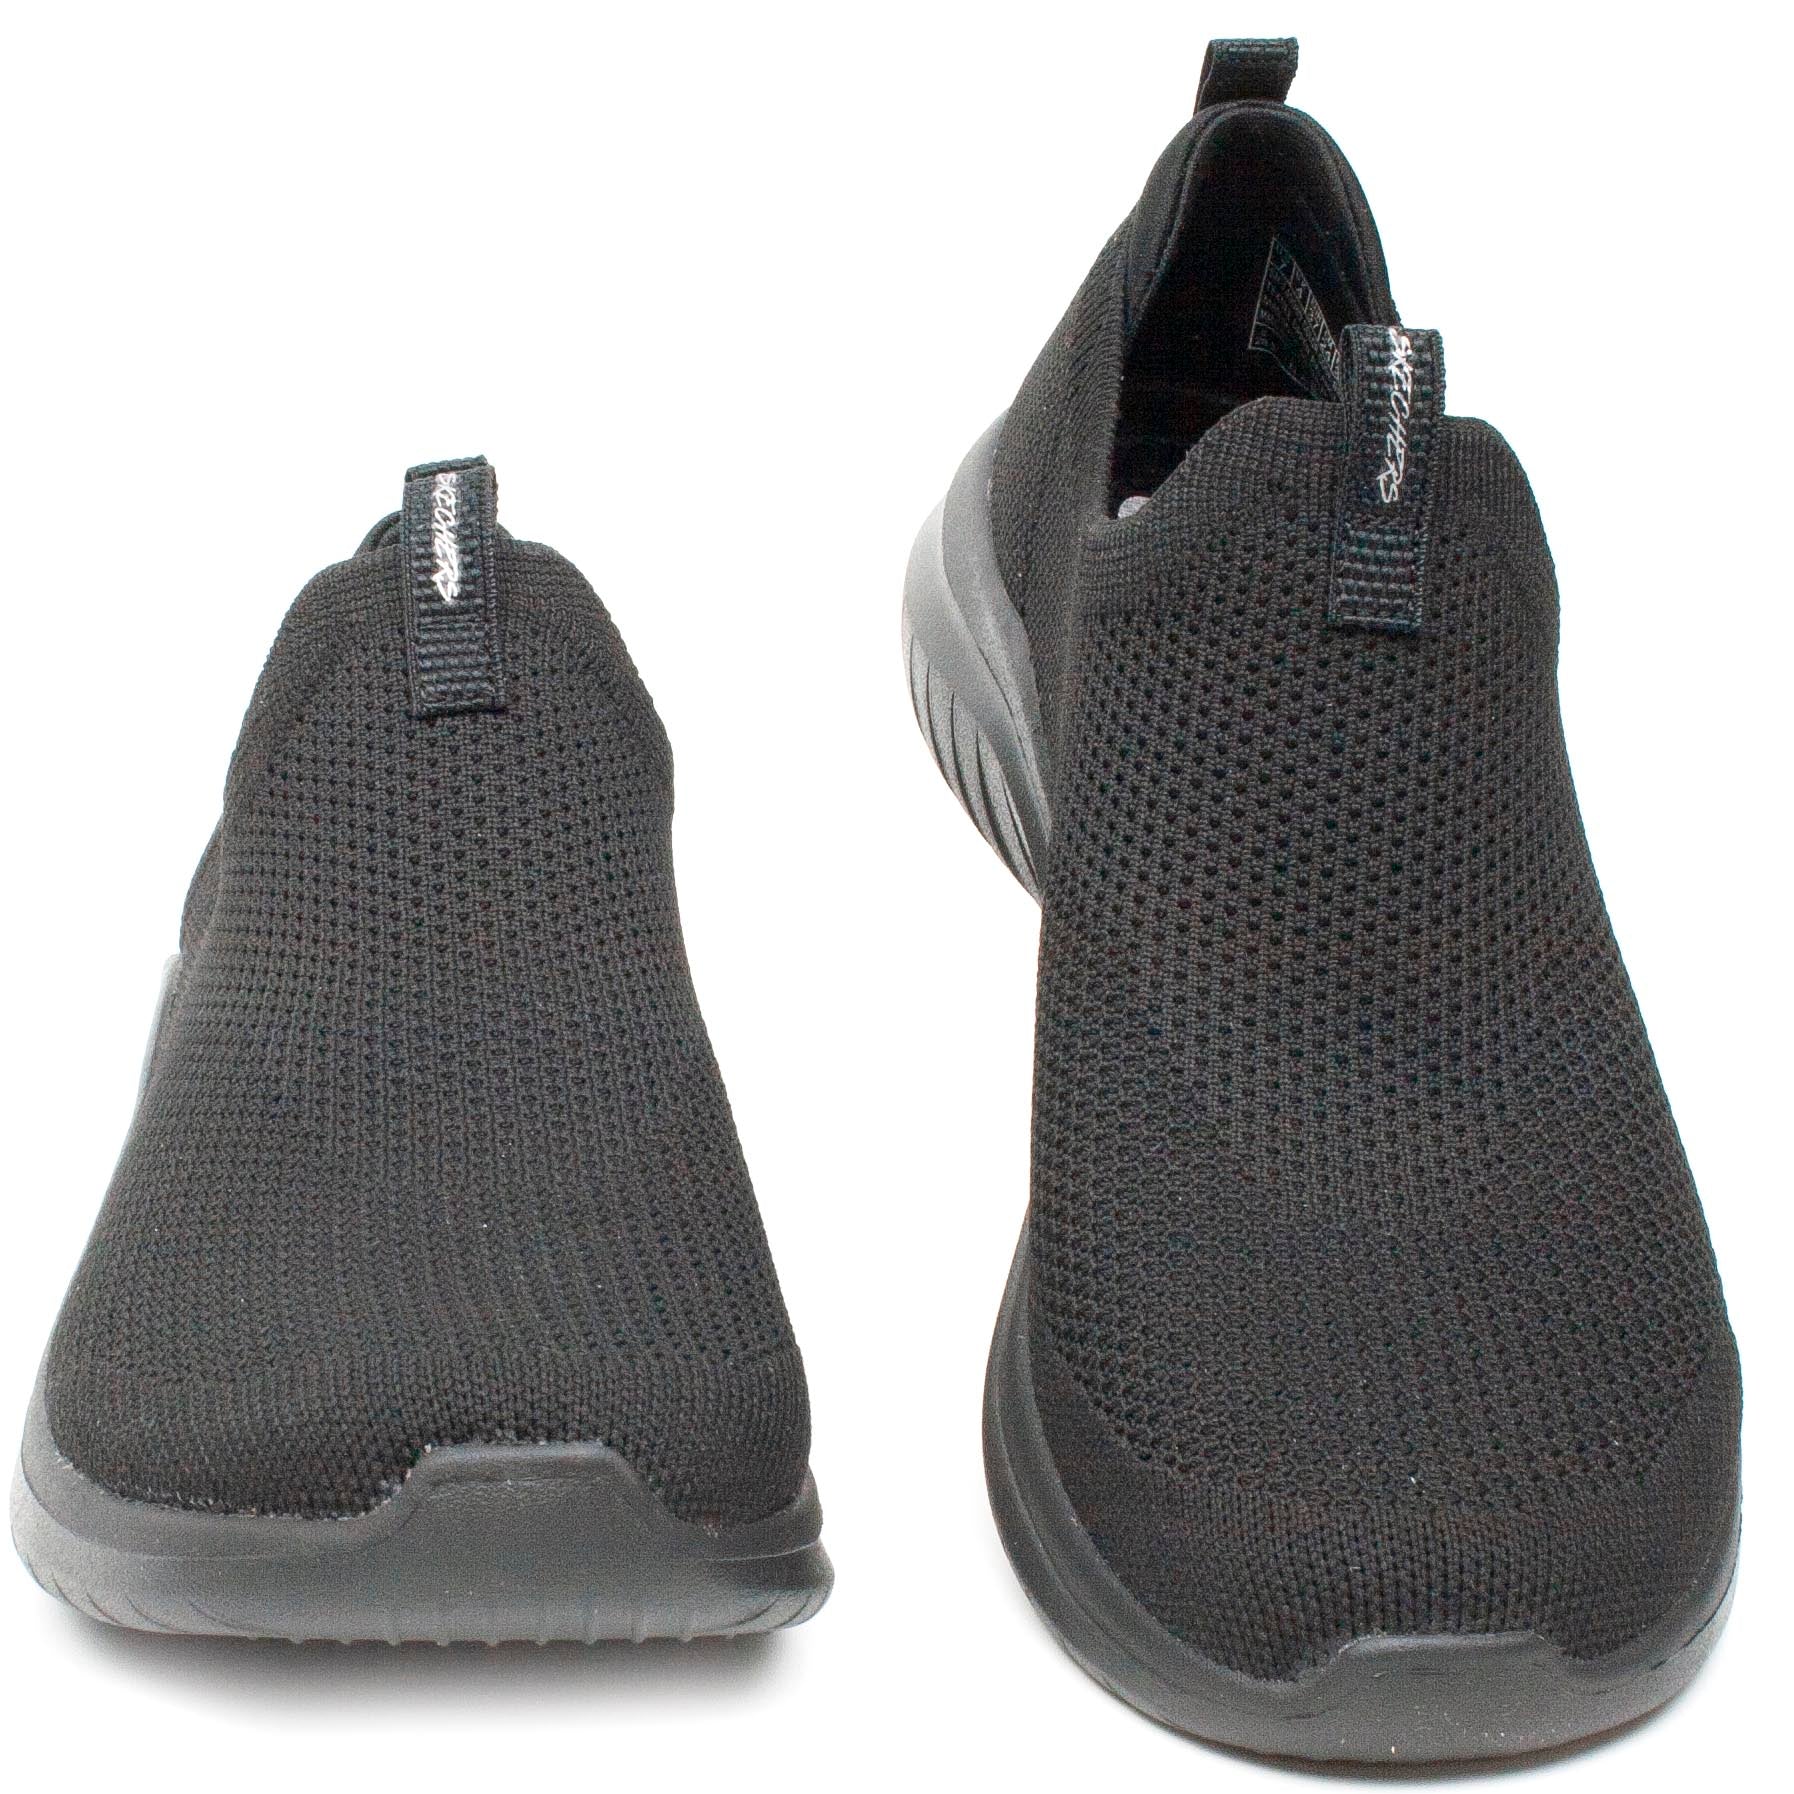 Skechers pantofi dama sport 149089 negru ID2623-NG